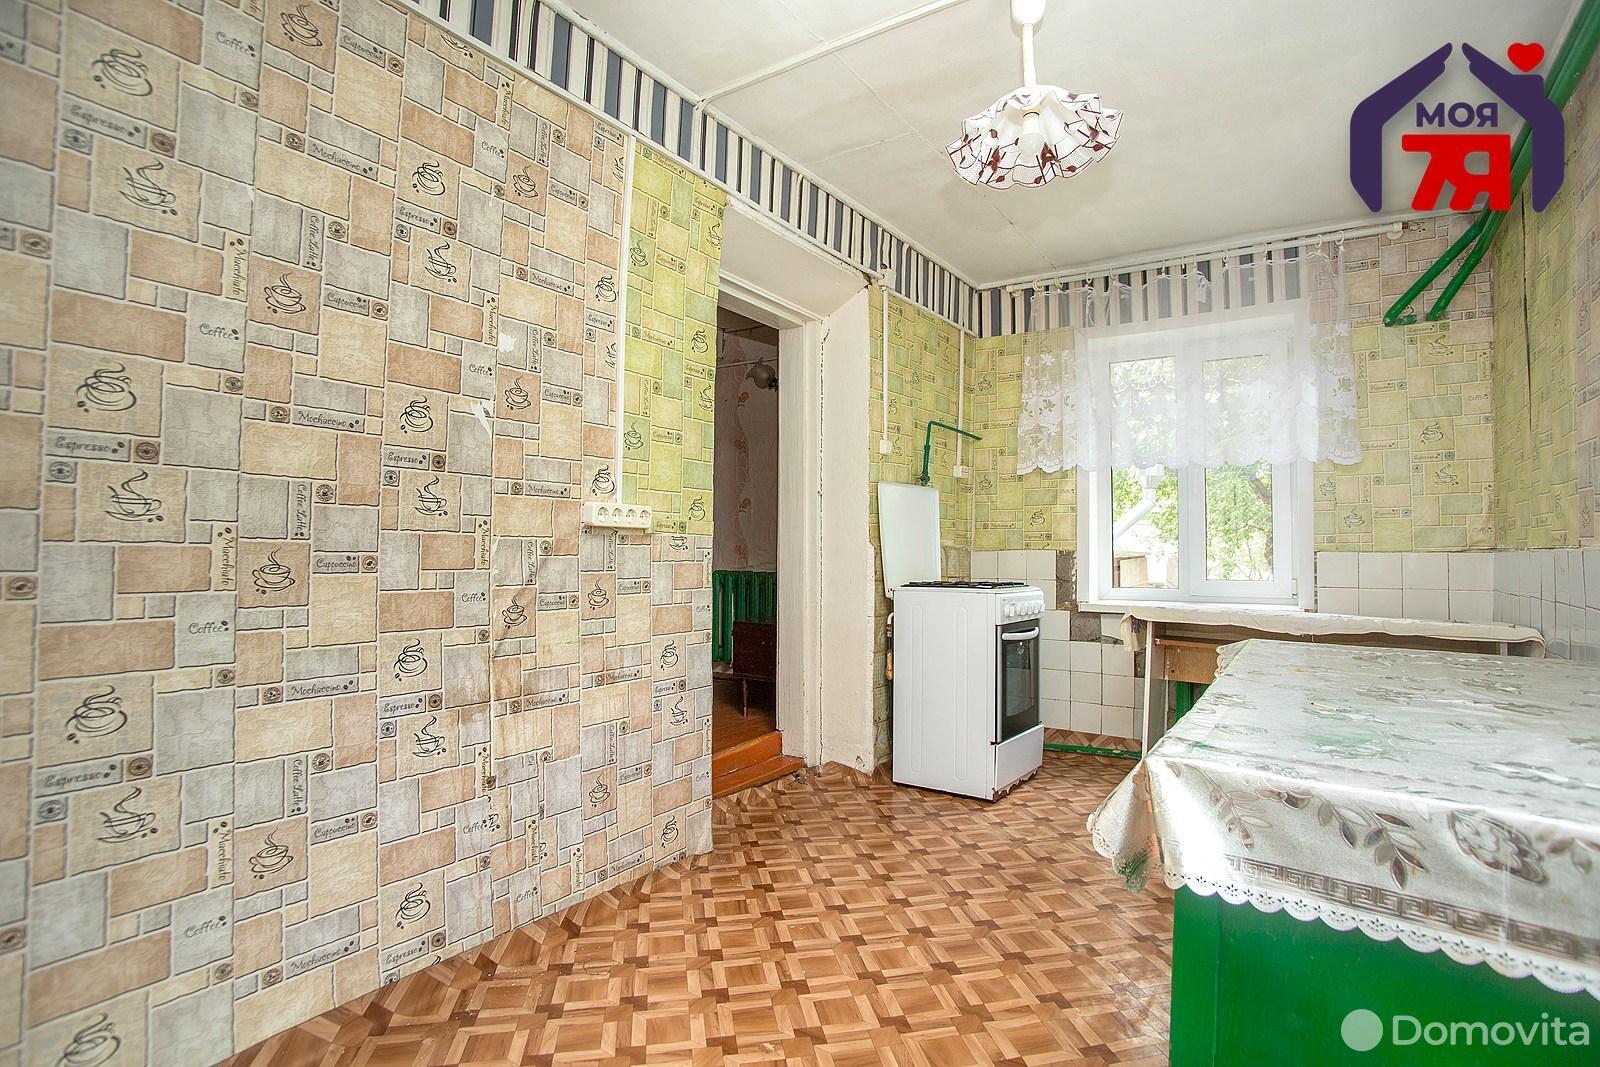 Стоимость продажи дома, Красное, ул. Сергея Новикова